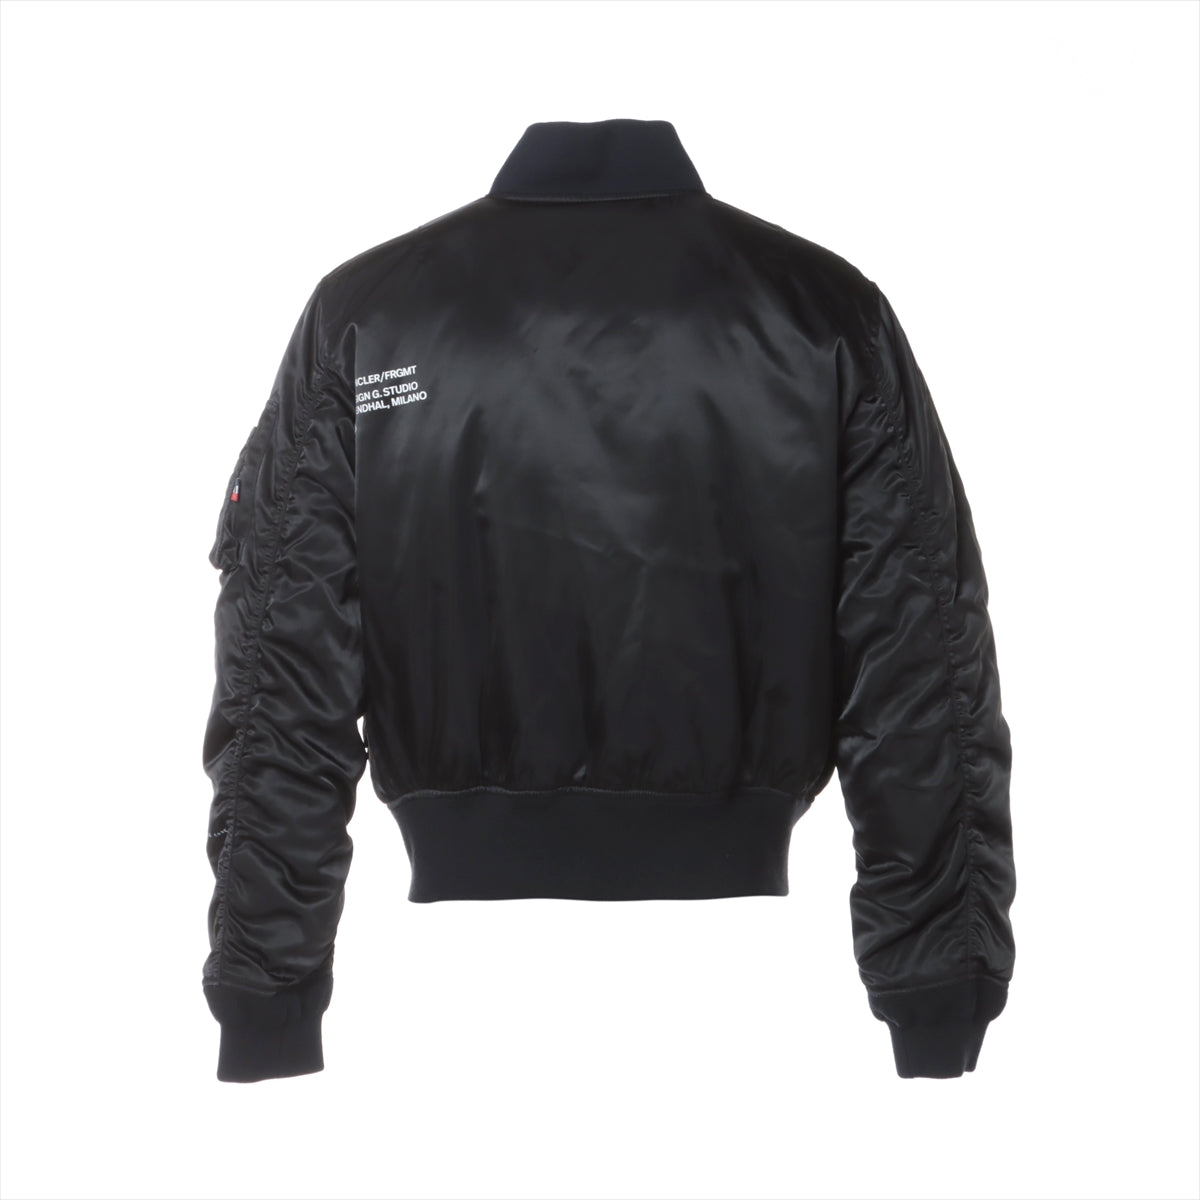 Moncler Genius Fragment 21 years Nylon Down jacket 1 Men's Black  RASSOS MA-1